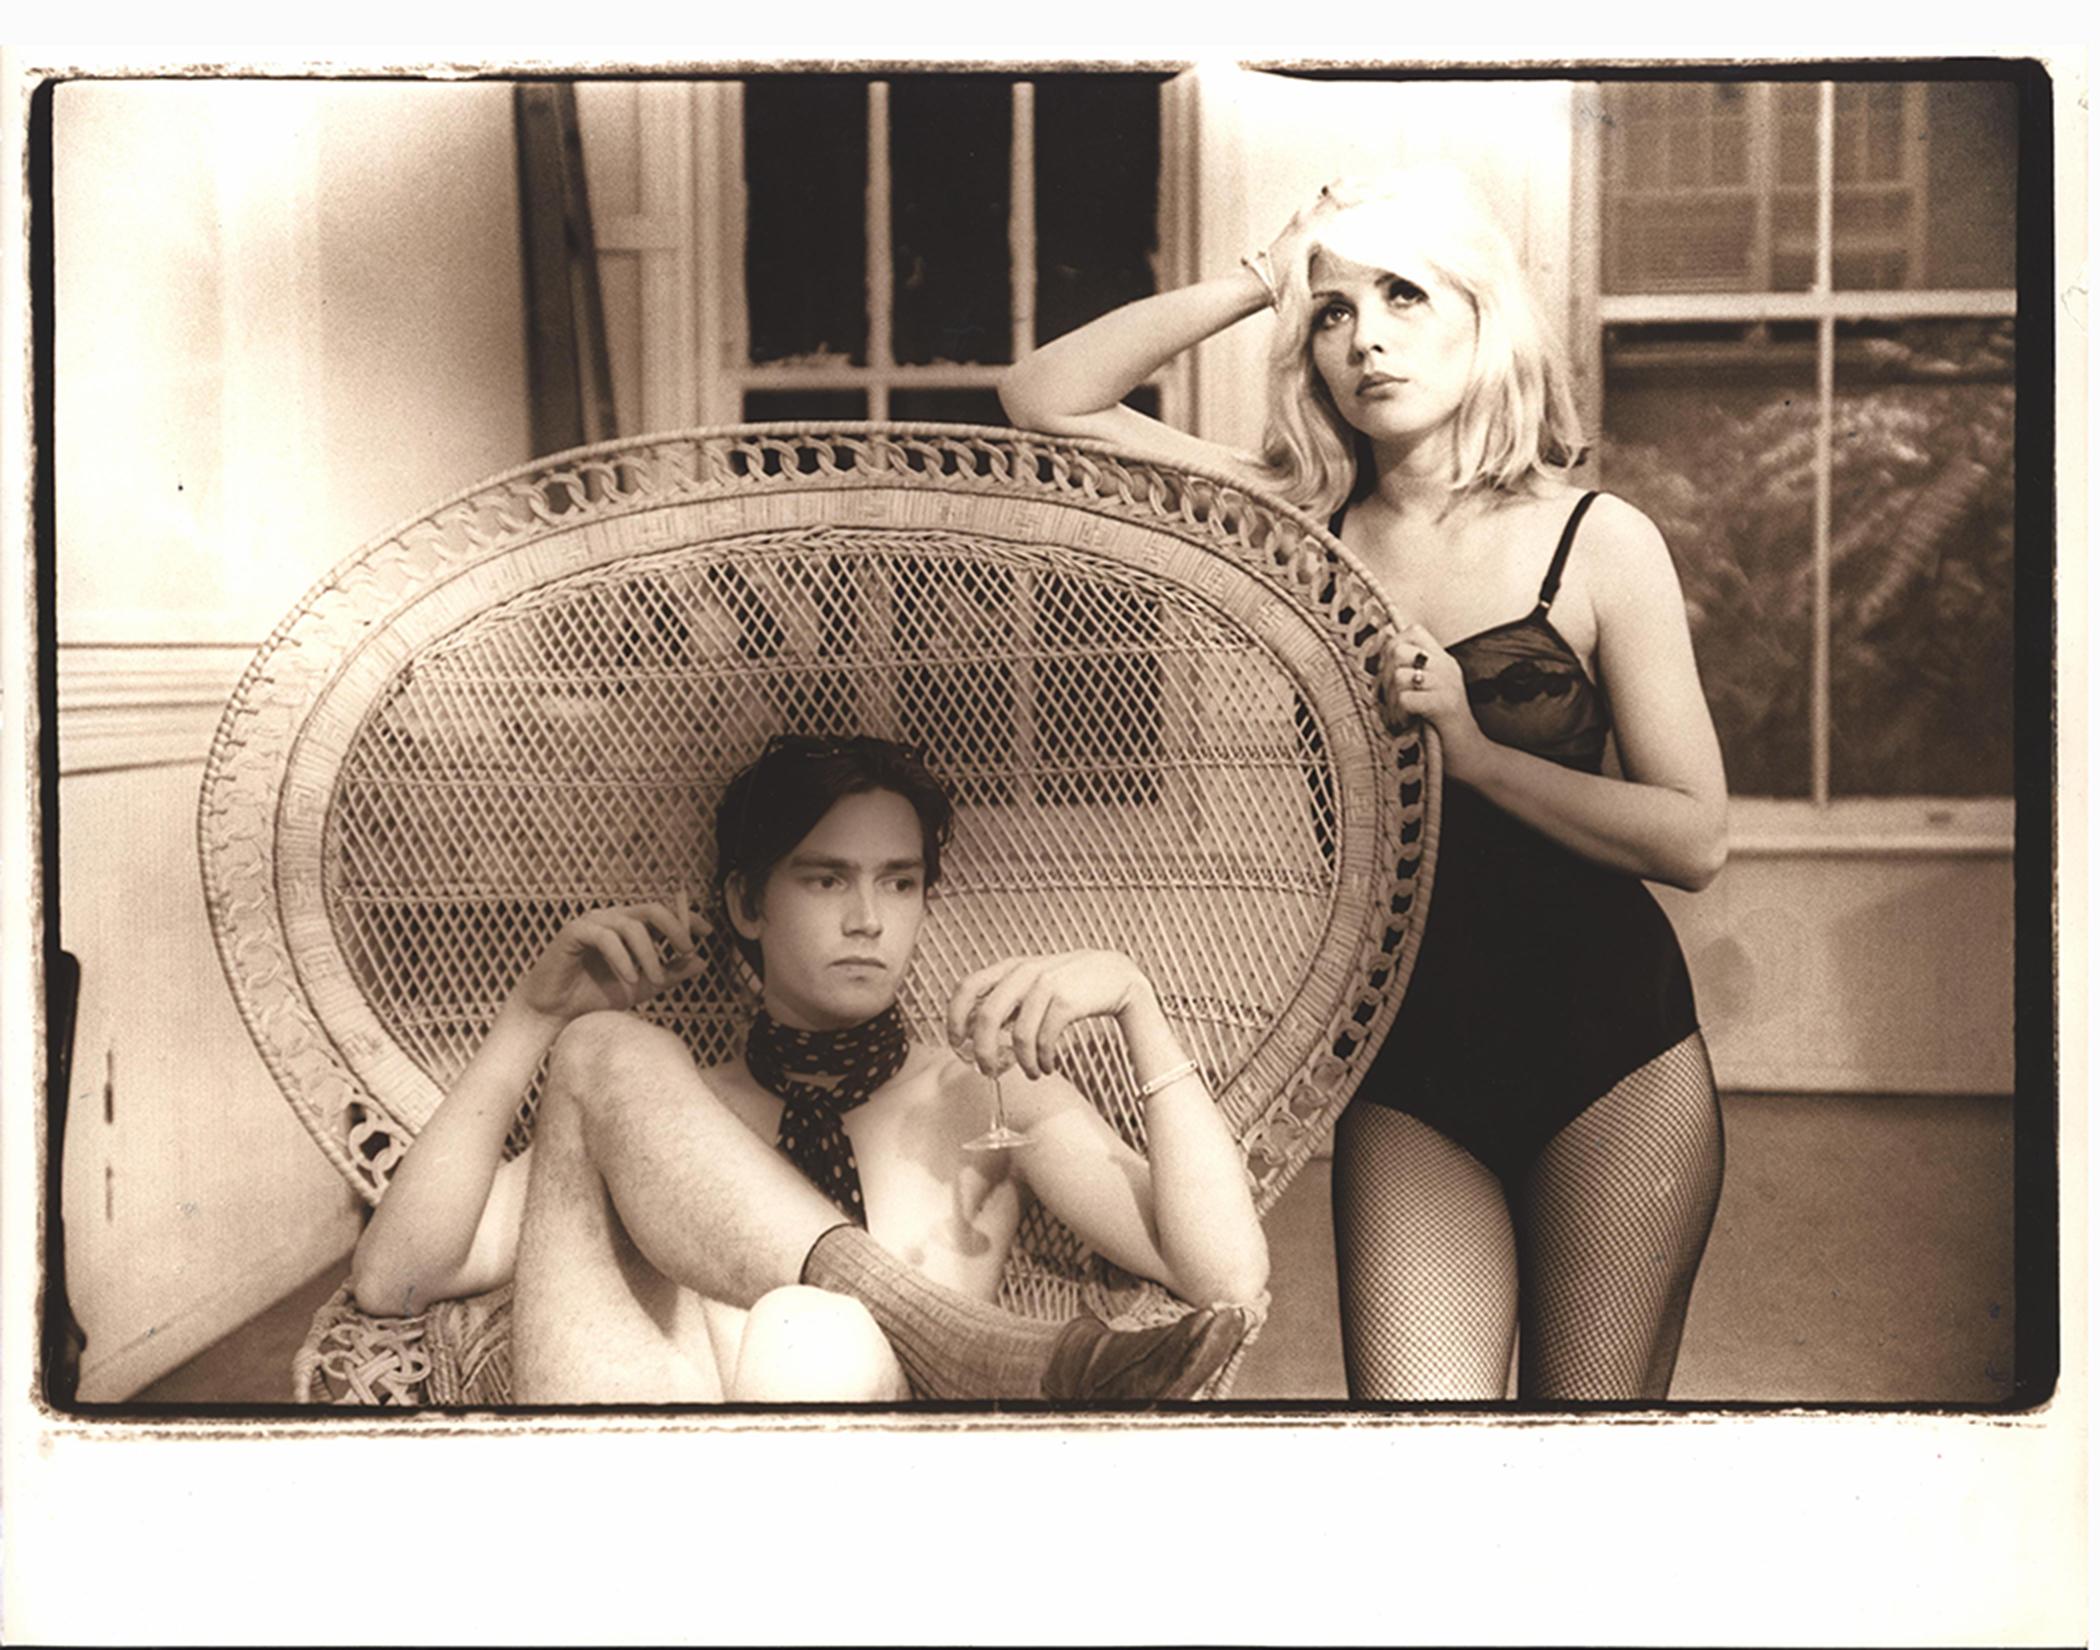 Nude Photograph Fernando Natalici - Debbie Harry, Duncan Hannah (lits non faits), New York 1976